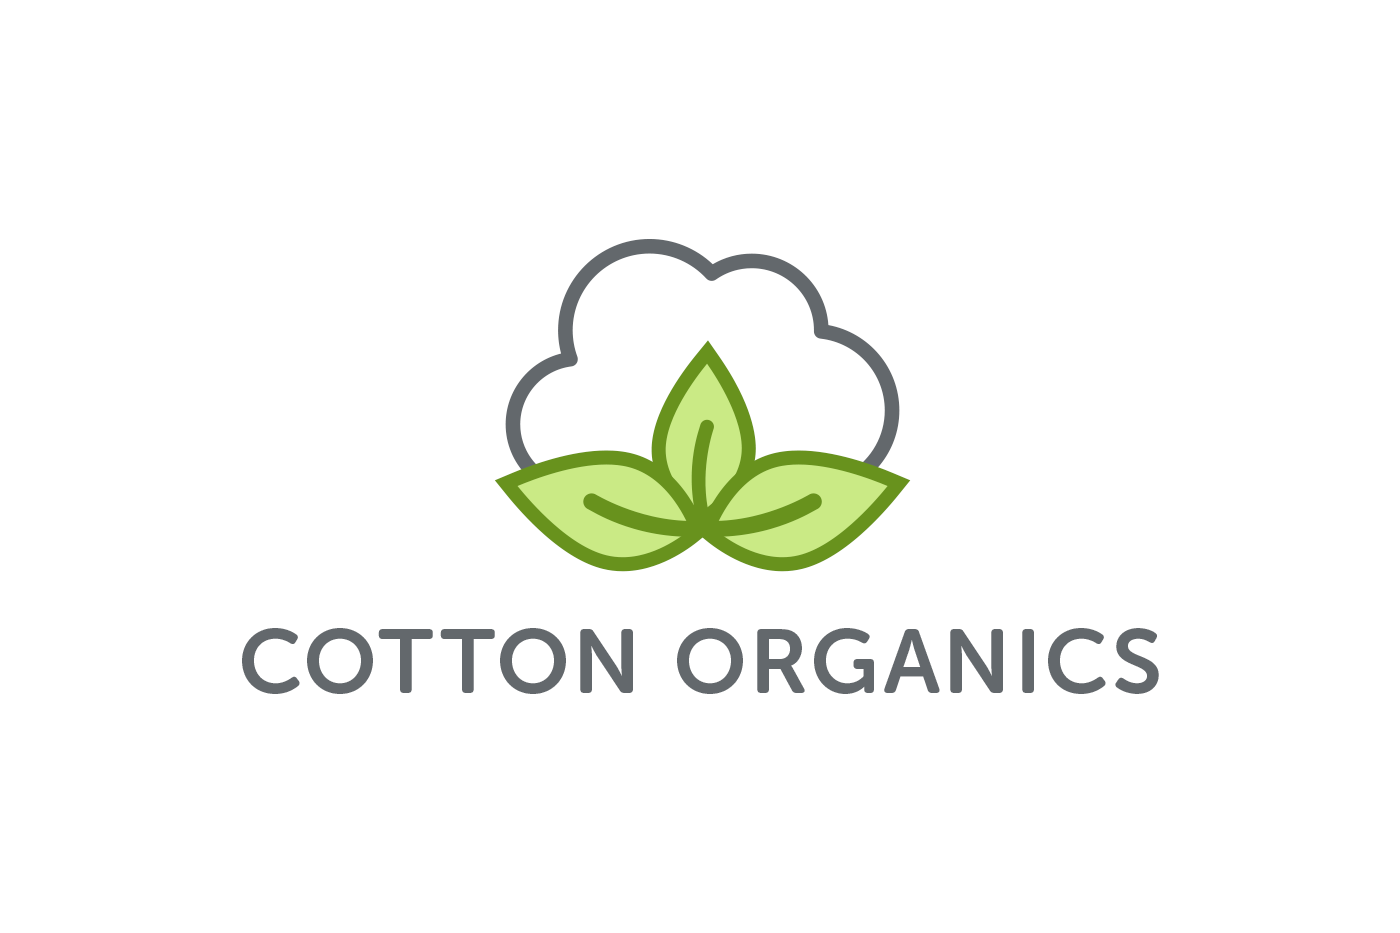 Cotton Organics | David Kuo | Portfolio